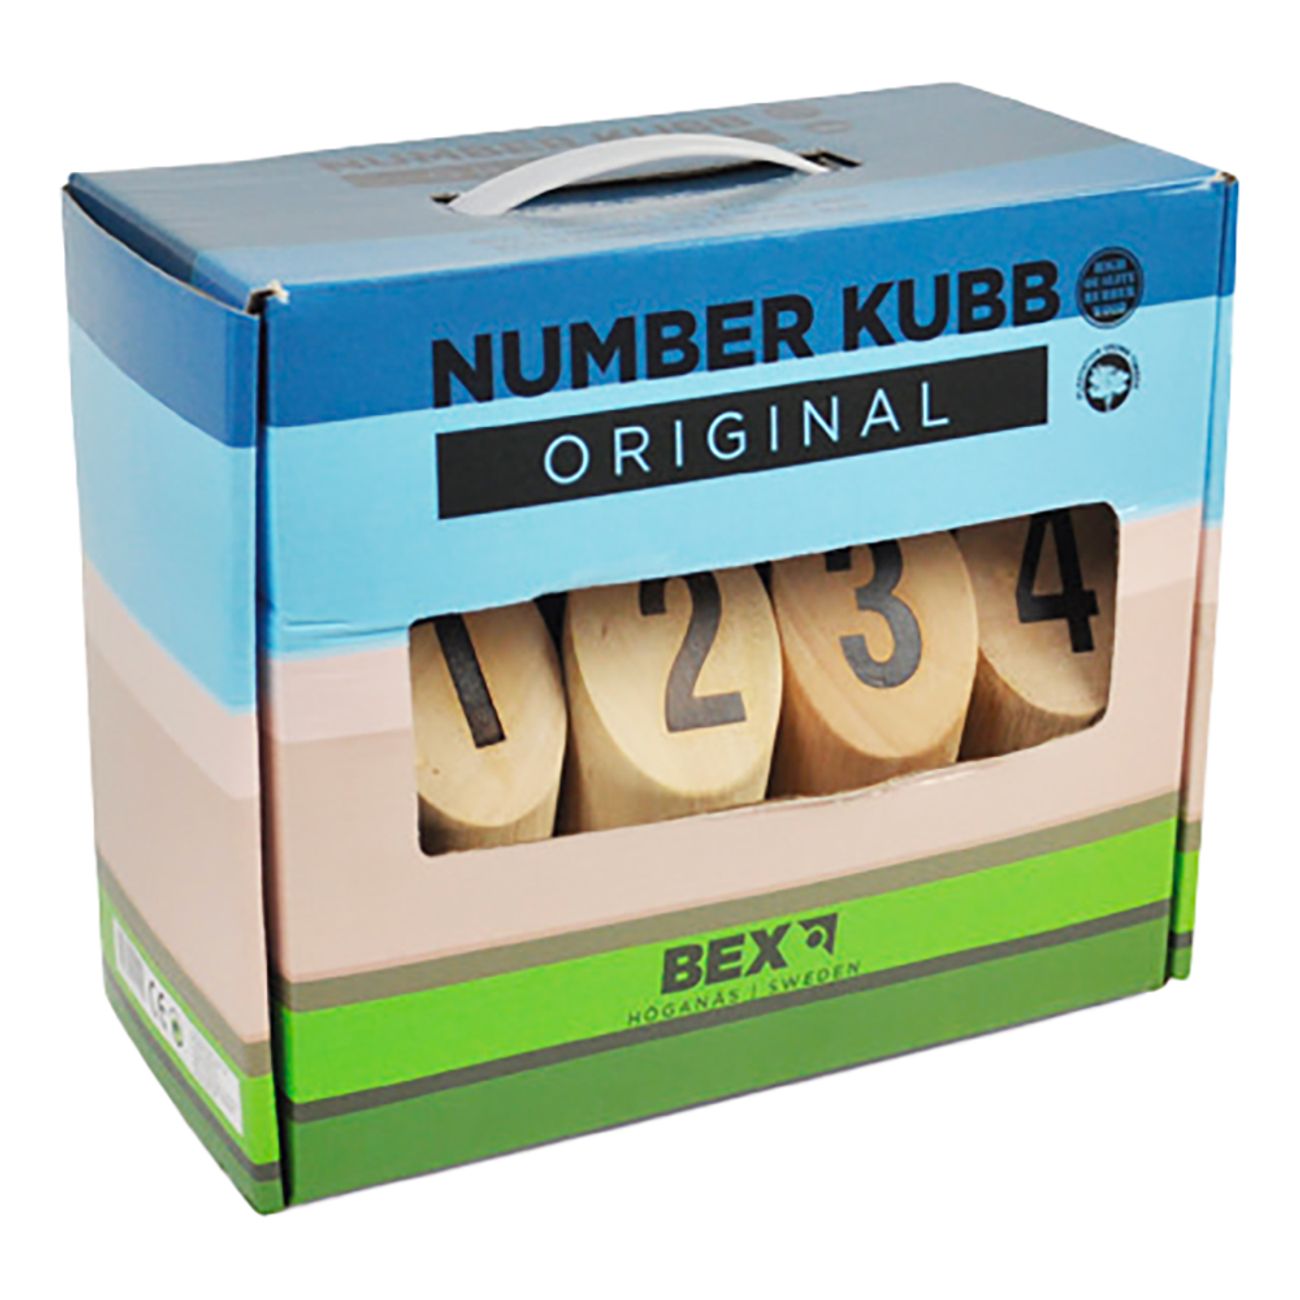 number-kubb-original-82321-2